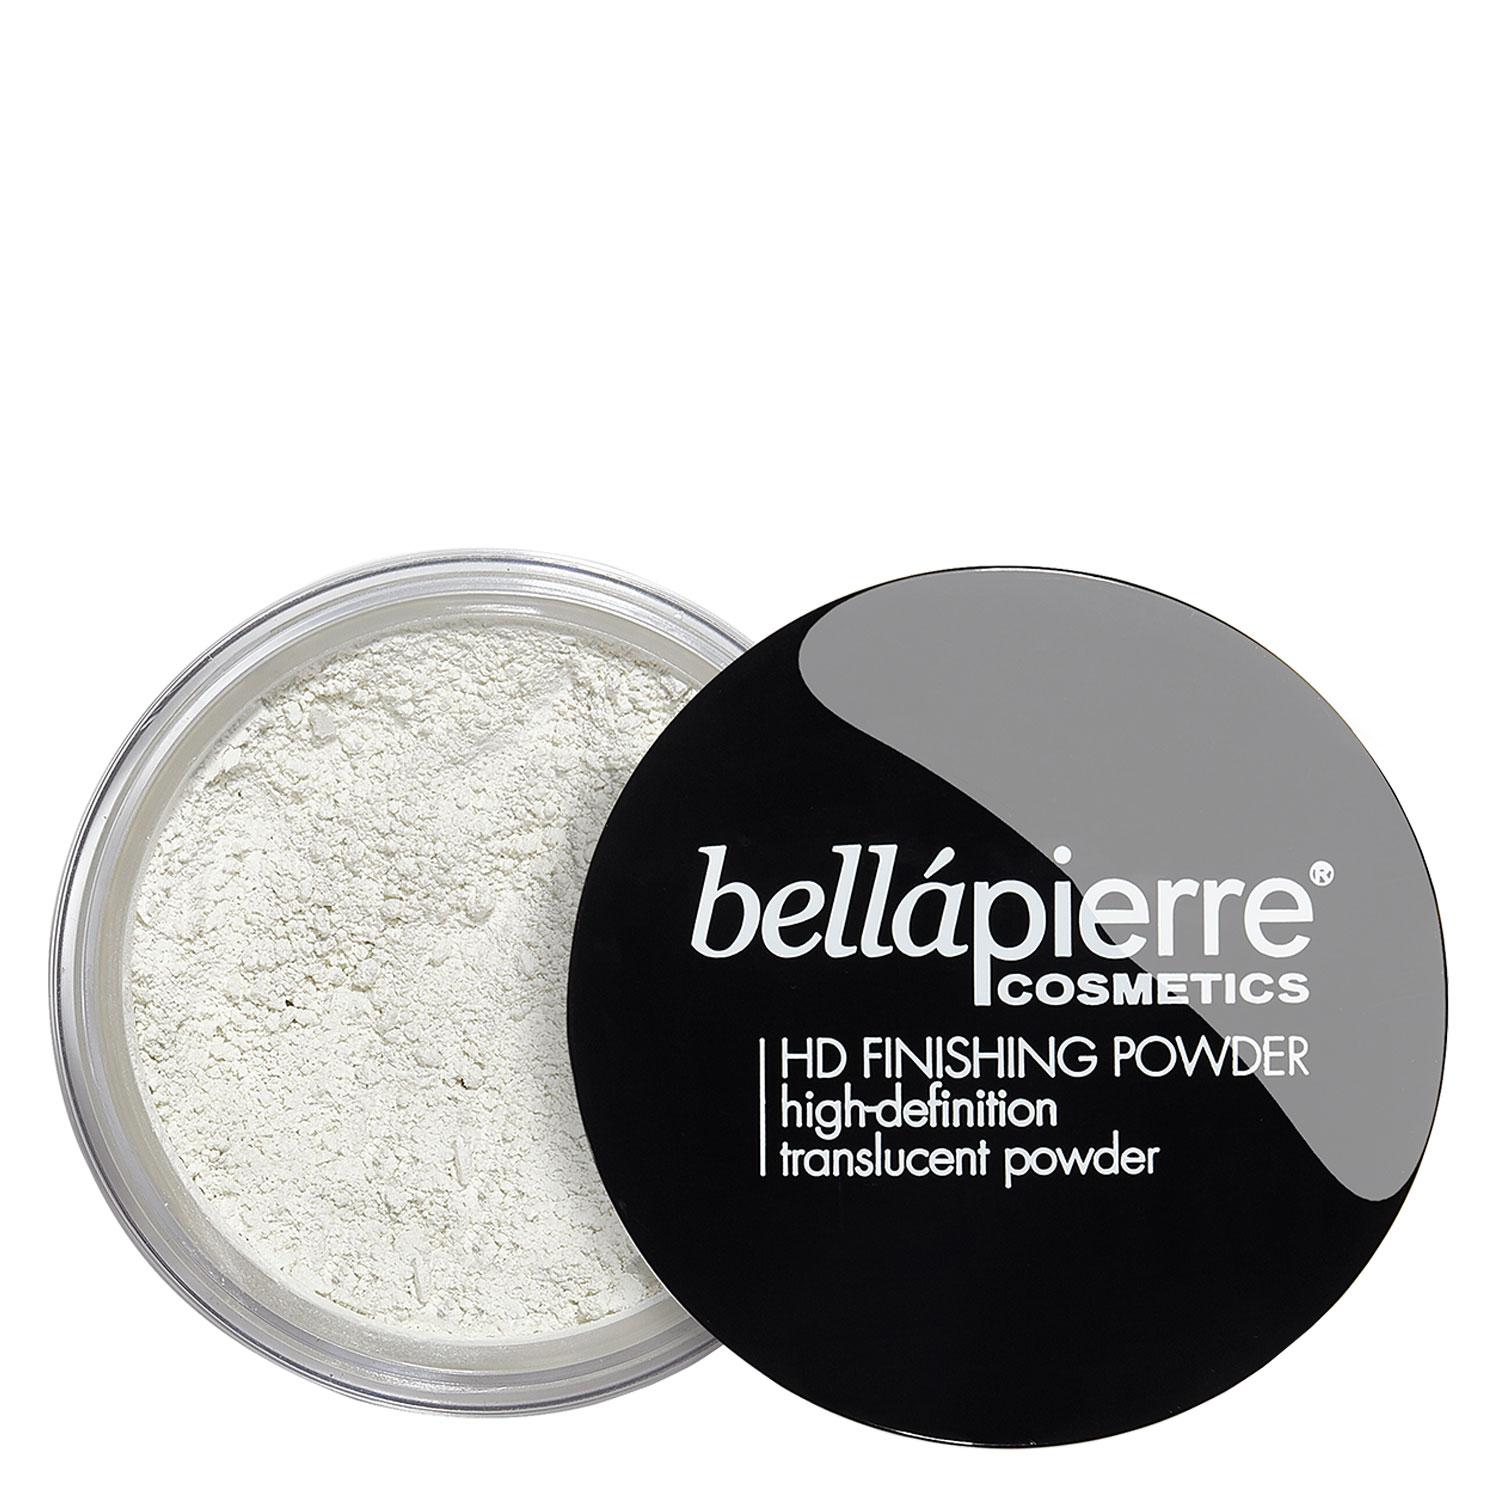 bellapierre Teint - HD Finishing Powder Translucent